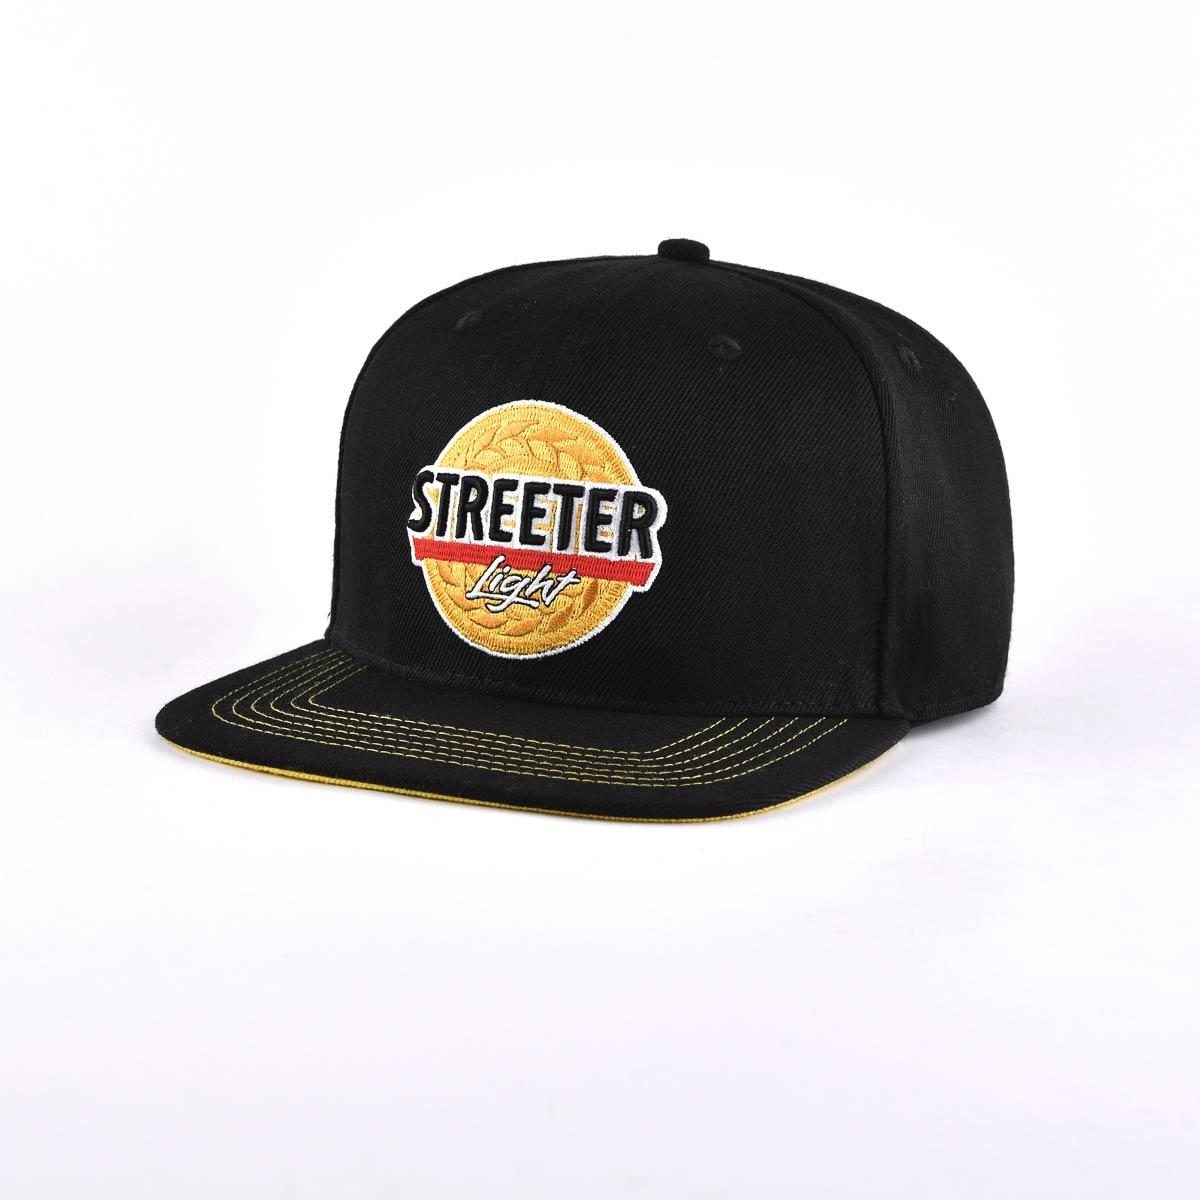 Streeter-unisex-black-snapback-hat-with-a-black-flat-brim-KN2012031